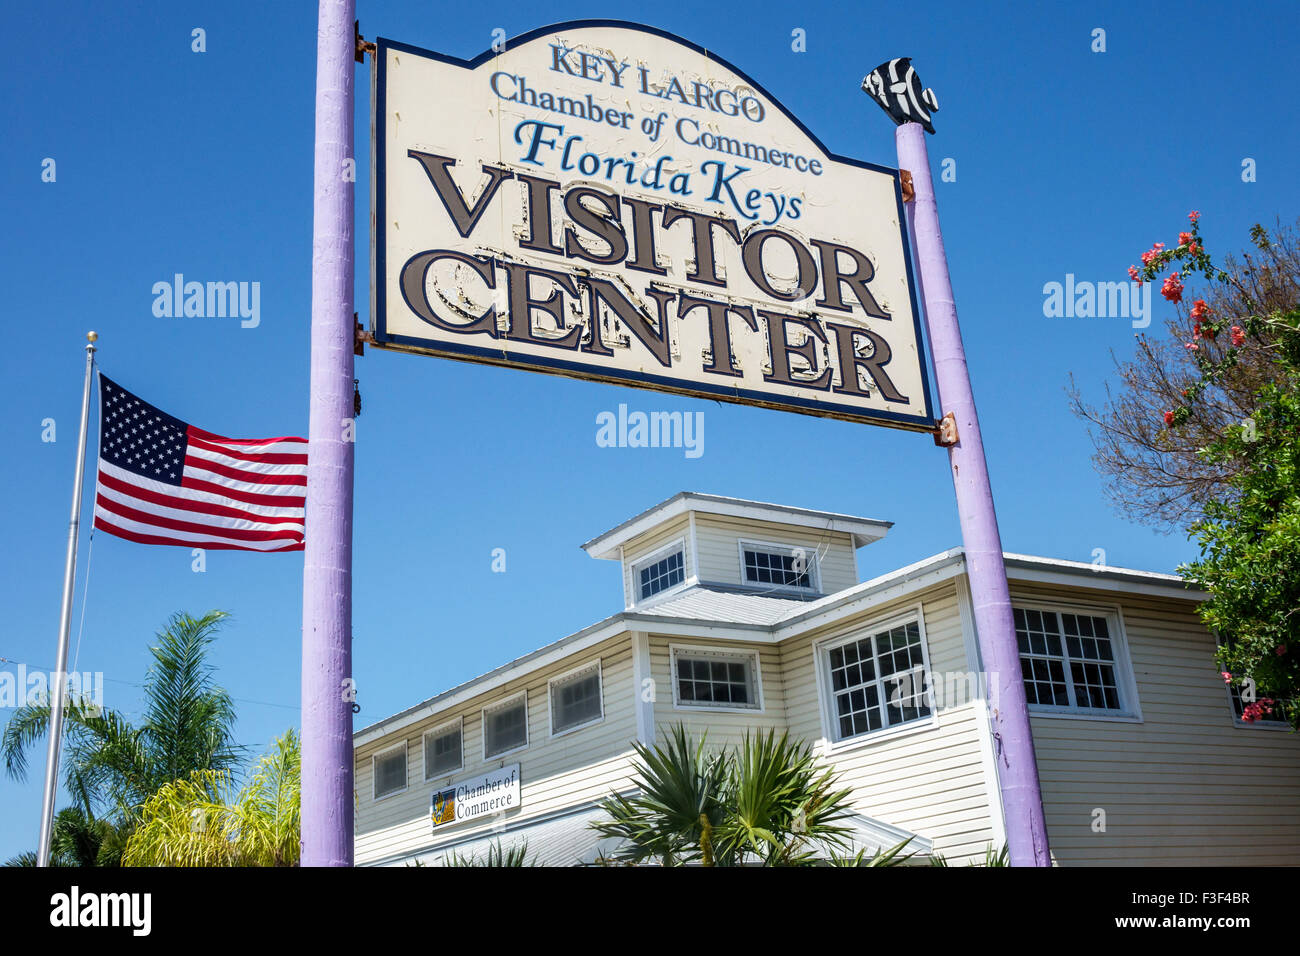 Key Largo Florida Keys,Visitor Center,centre,sign,chamber of commerce,FL150508004 Stock Photo